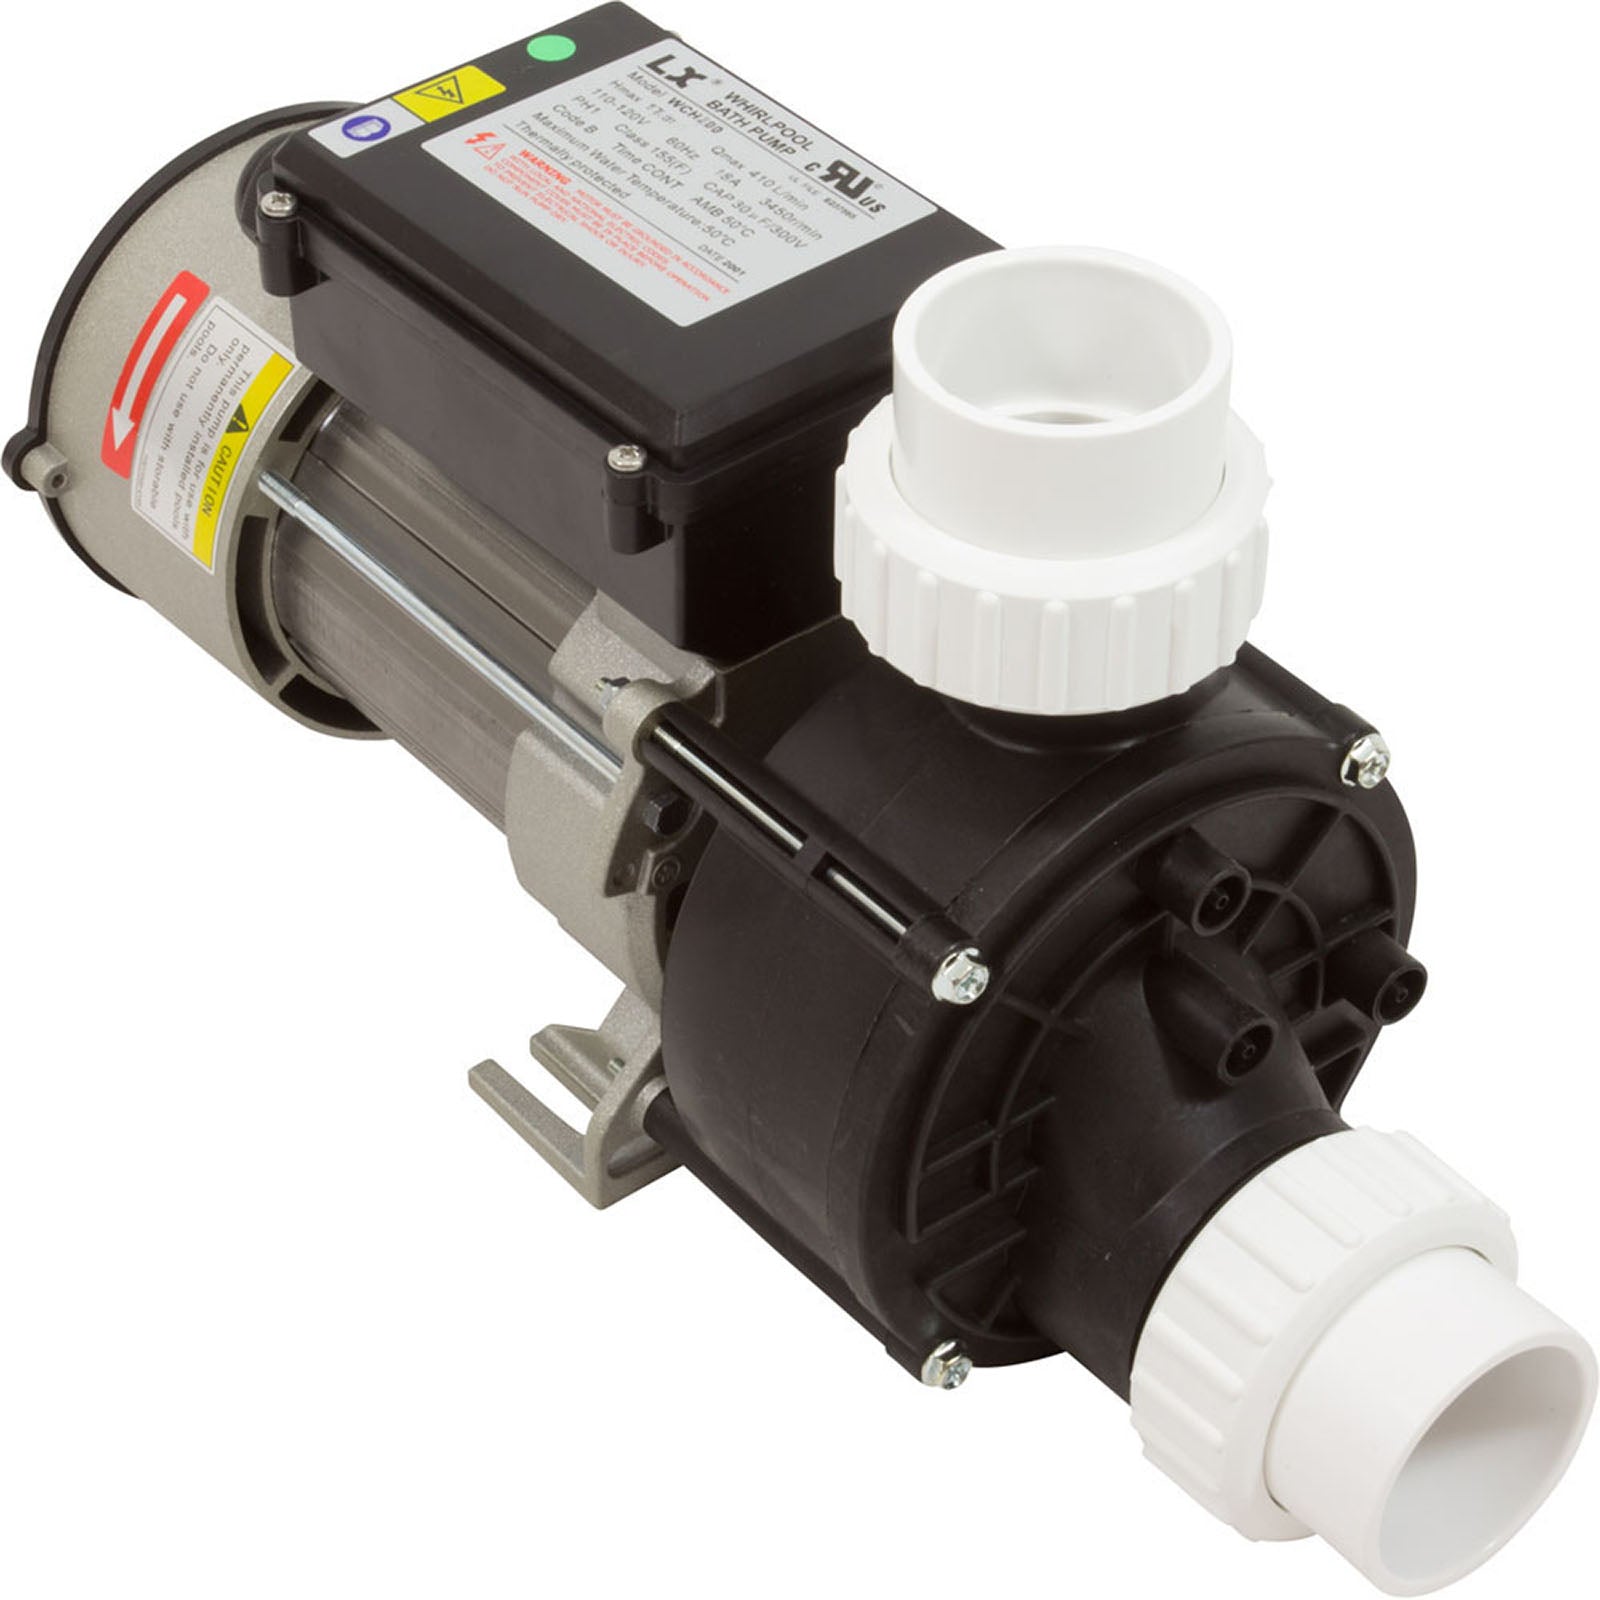 Kohler Proflex 9a Replacement Bath Pump, 9 amp, Air Switch, Cord (321JF10)